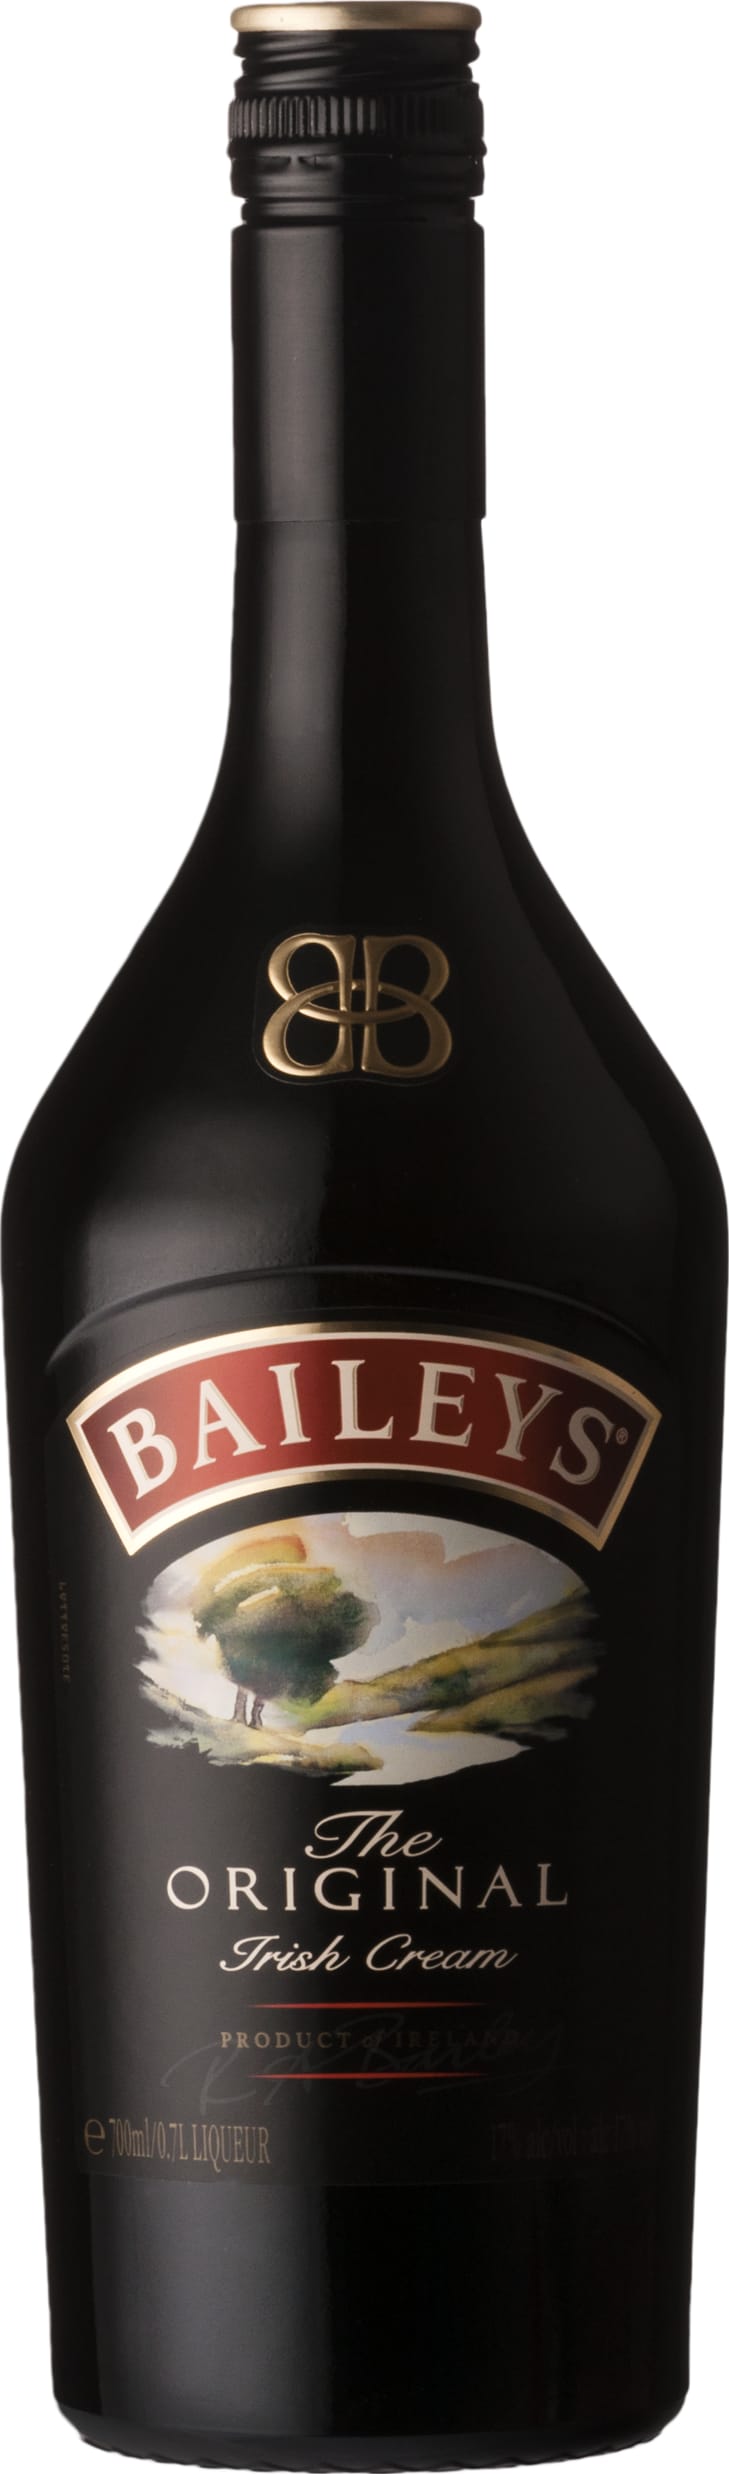 Baileys Baileys Cream Liqueur 70cl NV - Buy Baileys Wines from GREAT WINES DIRECT wine shop